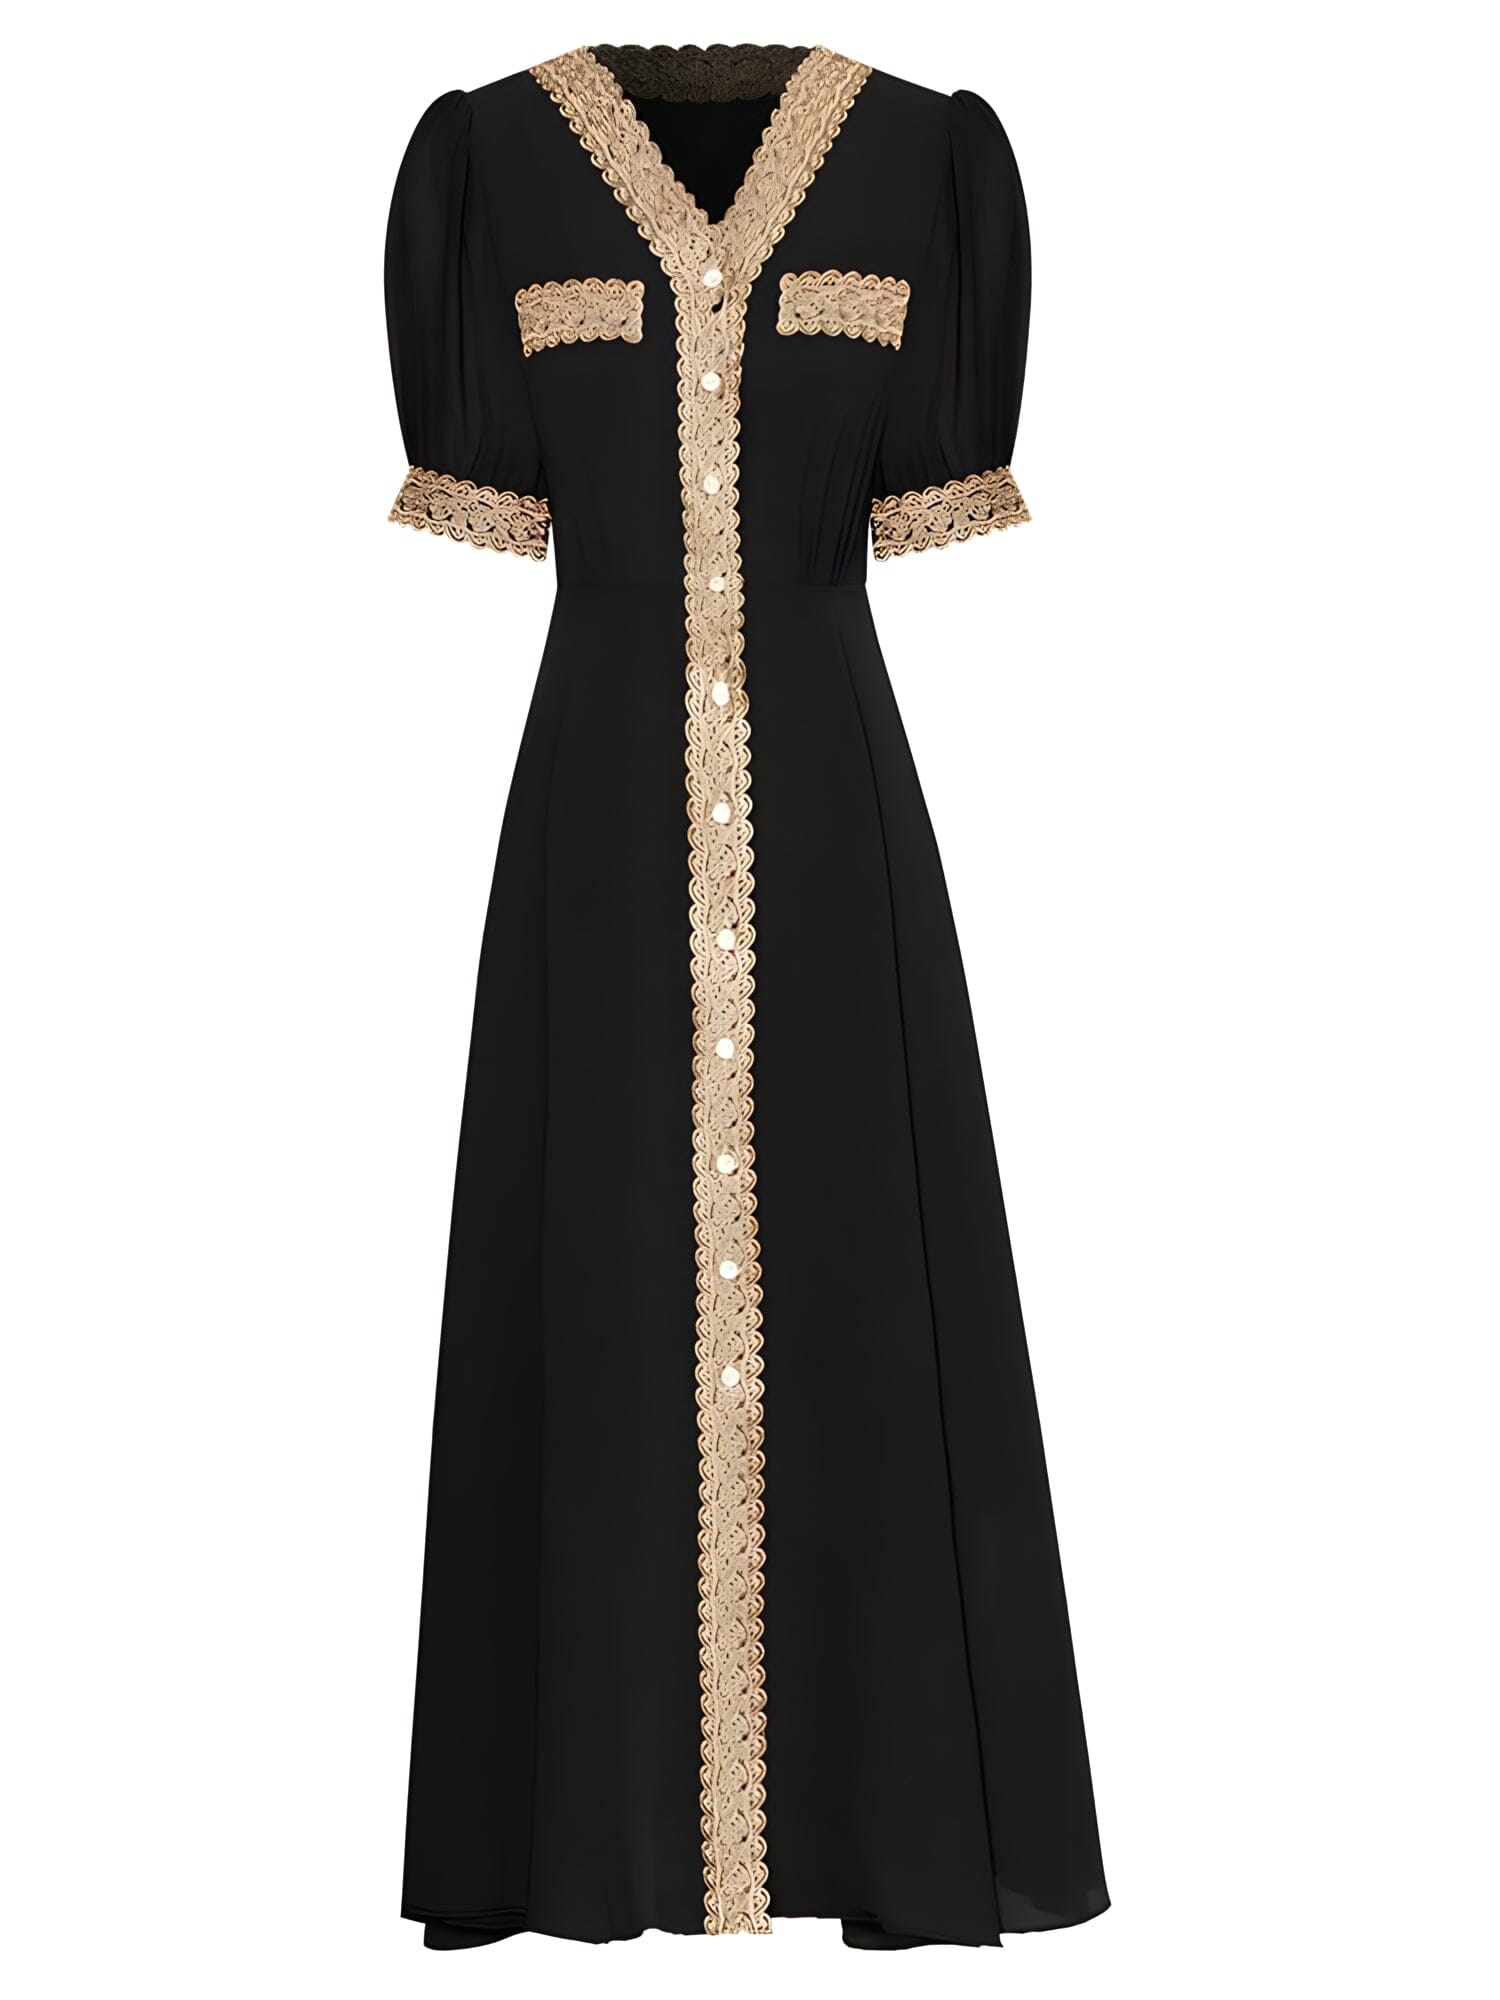 The Marcella Short Sleeve Dress - Multiple Colors 0 SA Styles Black S 